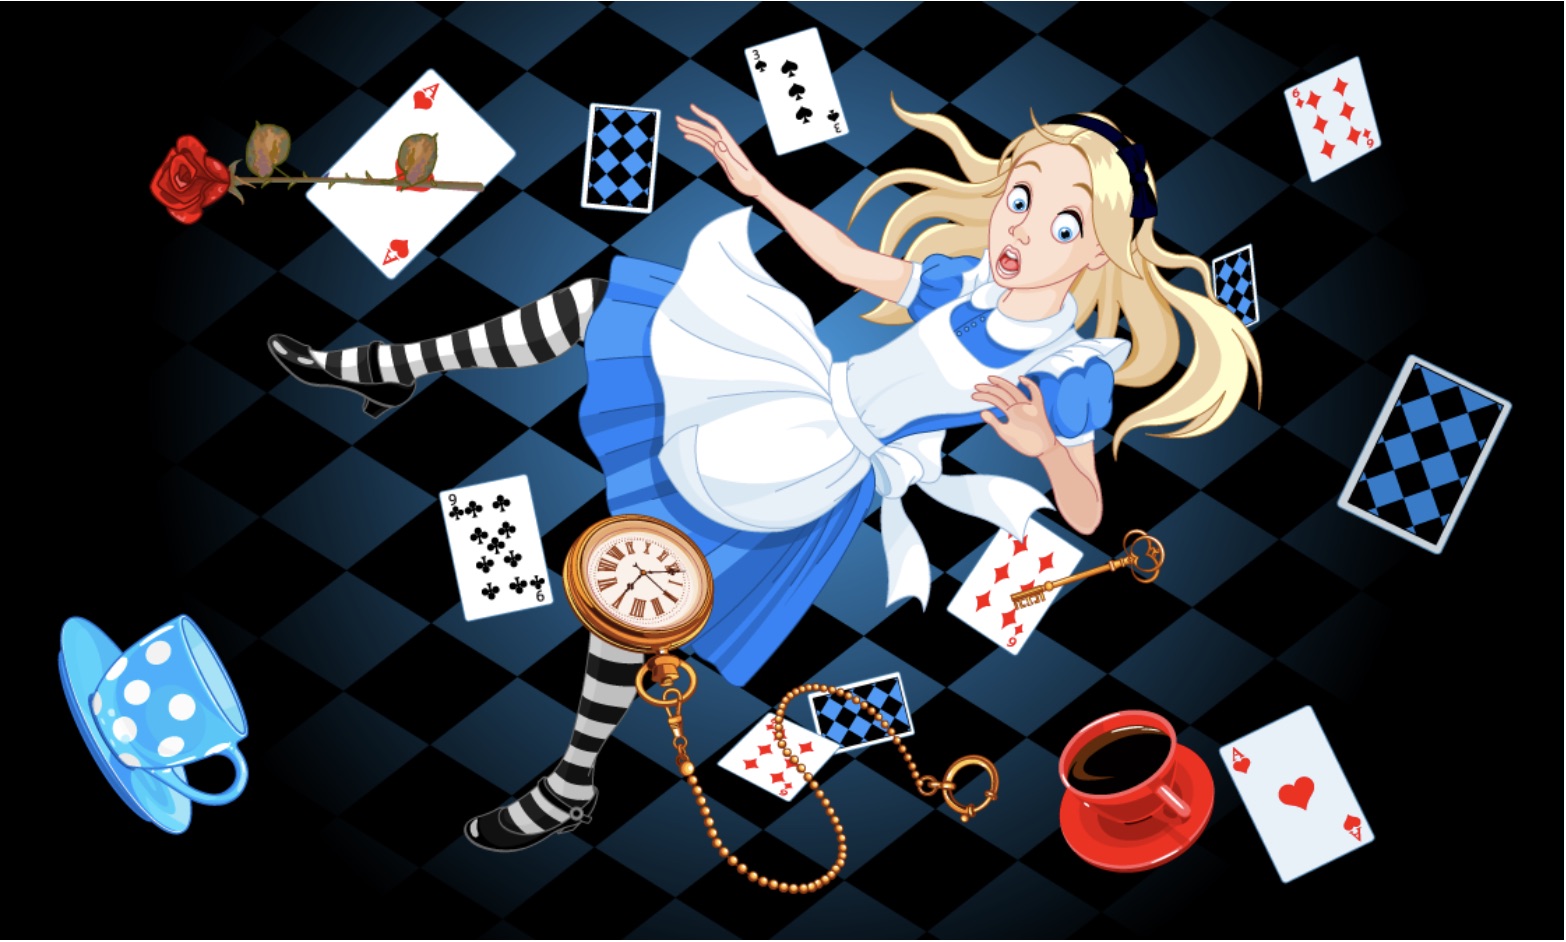 Rabbit hole vocaloid. Алиса в стране чудес. Алиса в стране чудес Алиса. Кэрролл Льюис "Алиса в стране чудес". Алиса в стране чудес персонажи иллюстрации.